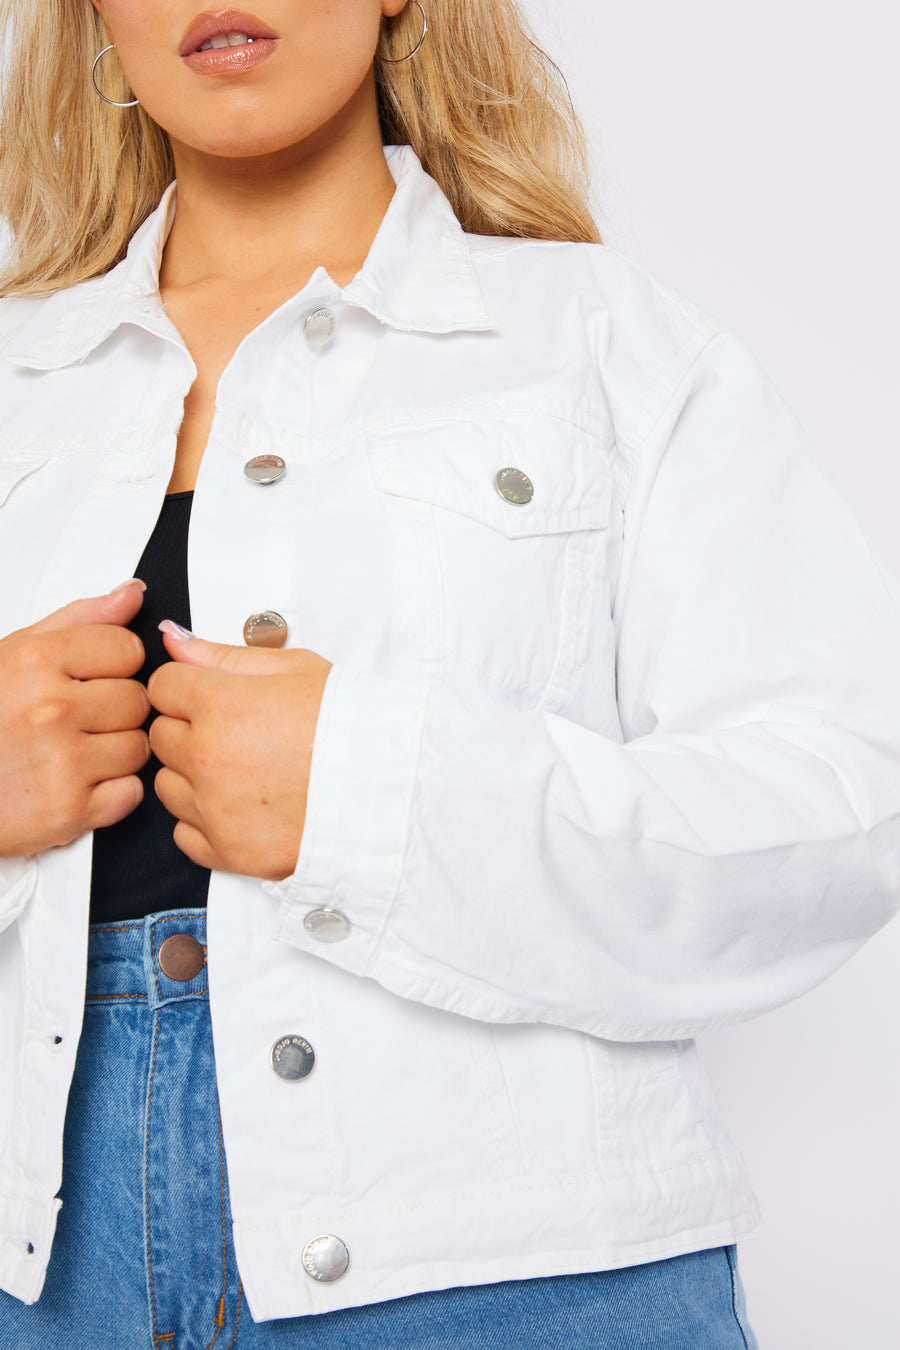 Close up product detail shot of a standing plus size female model wearing a JMOJO White Denim Trucker Jacket